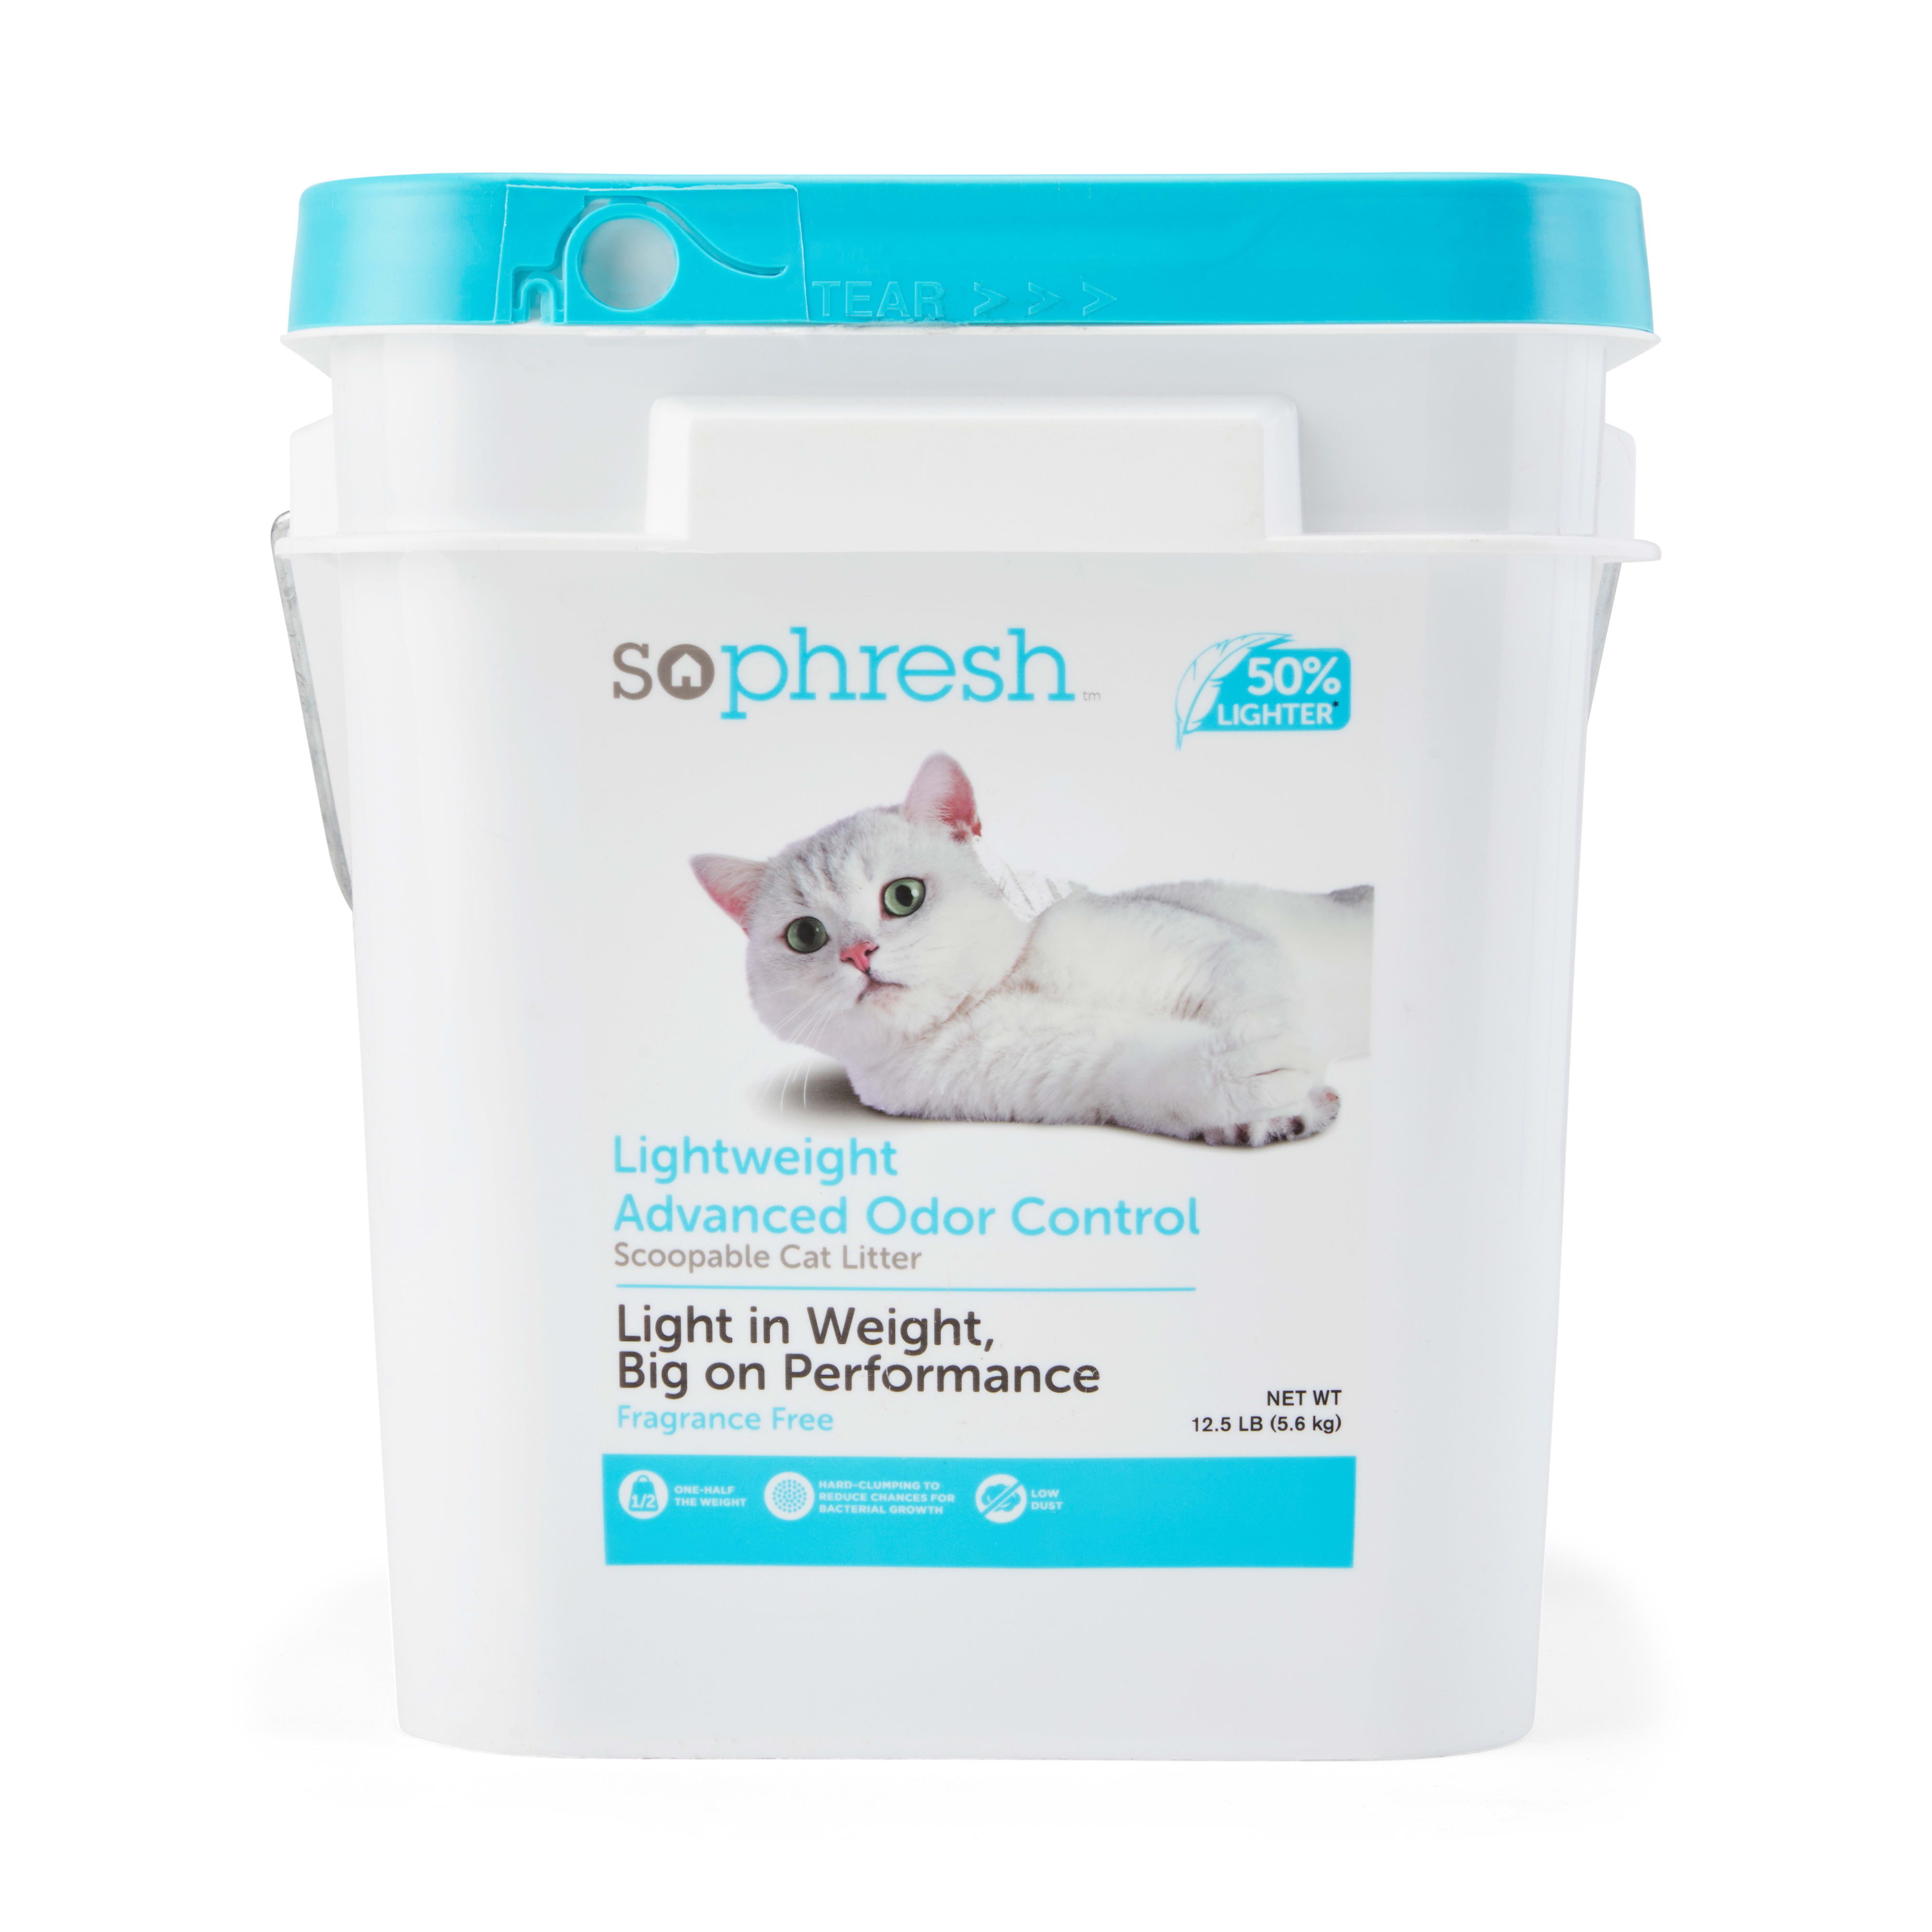 So Phresh Lightweight Advanced Odor Control Cat Litter, 12.5 lbs. Petco